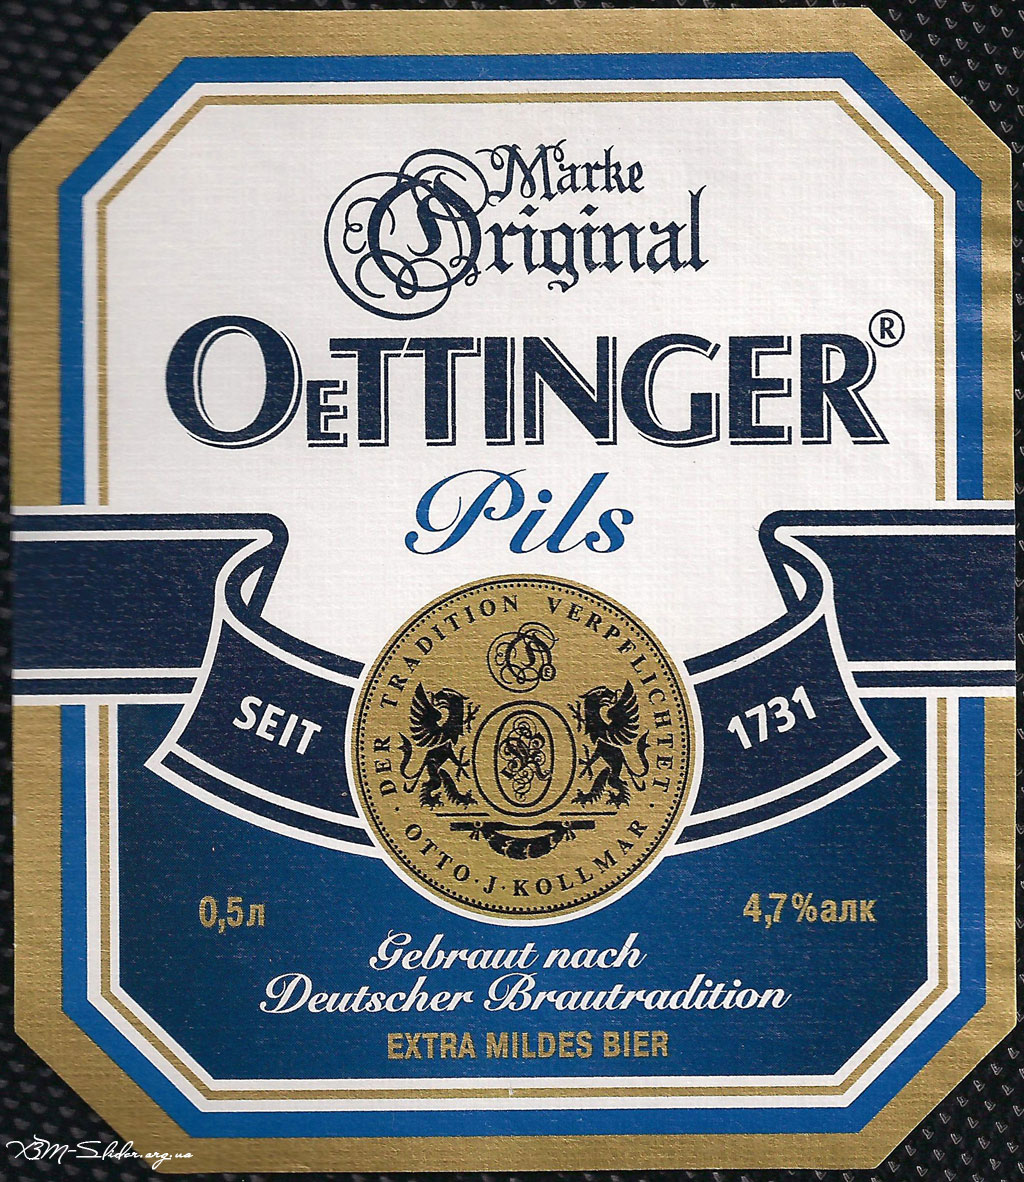 OeTTINGER - Pils - Marke Original - Seit 1731